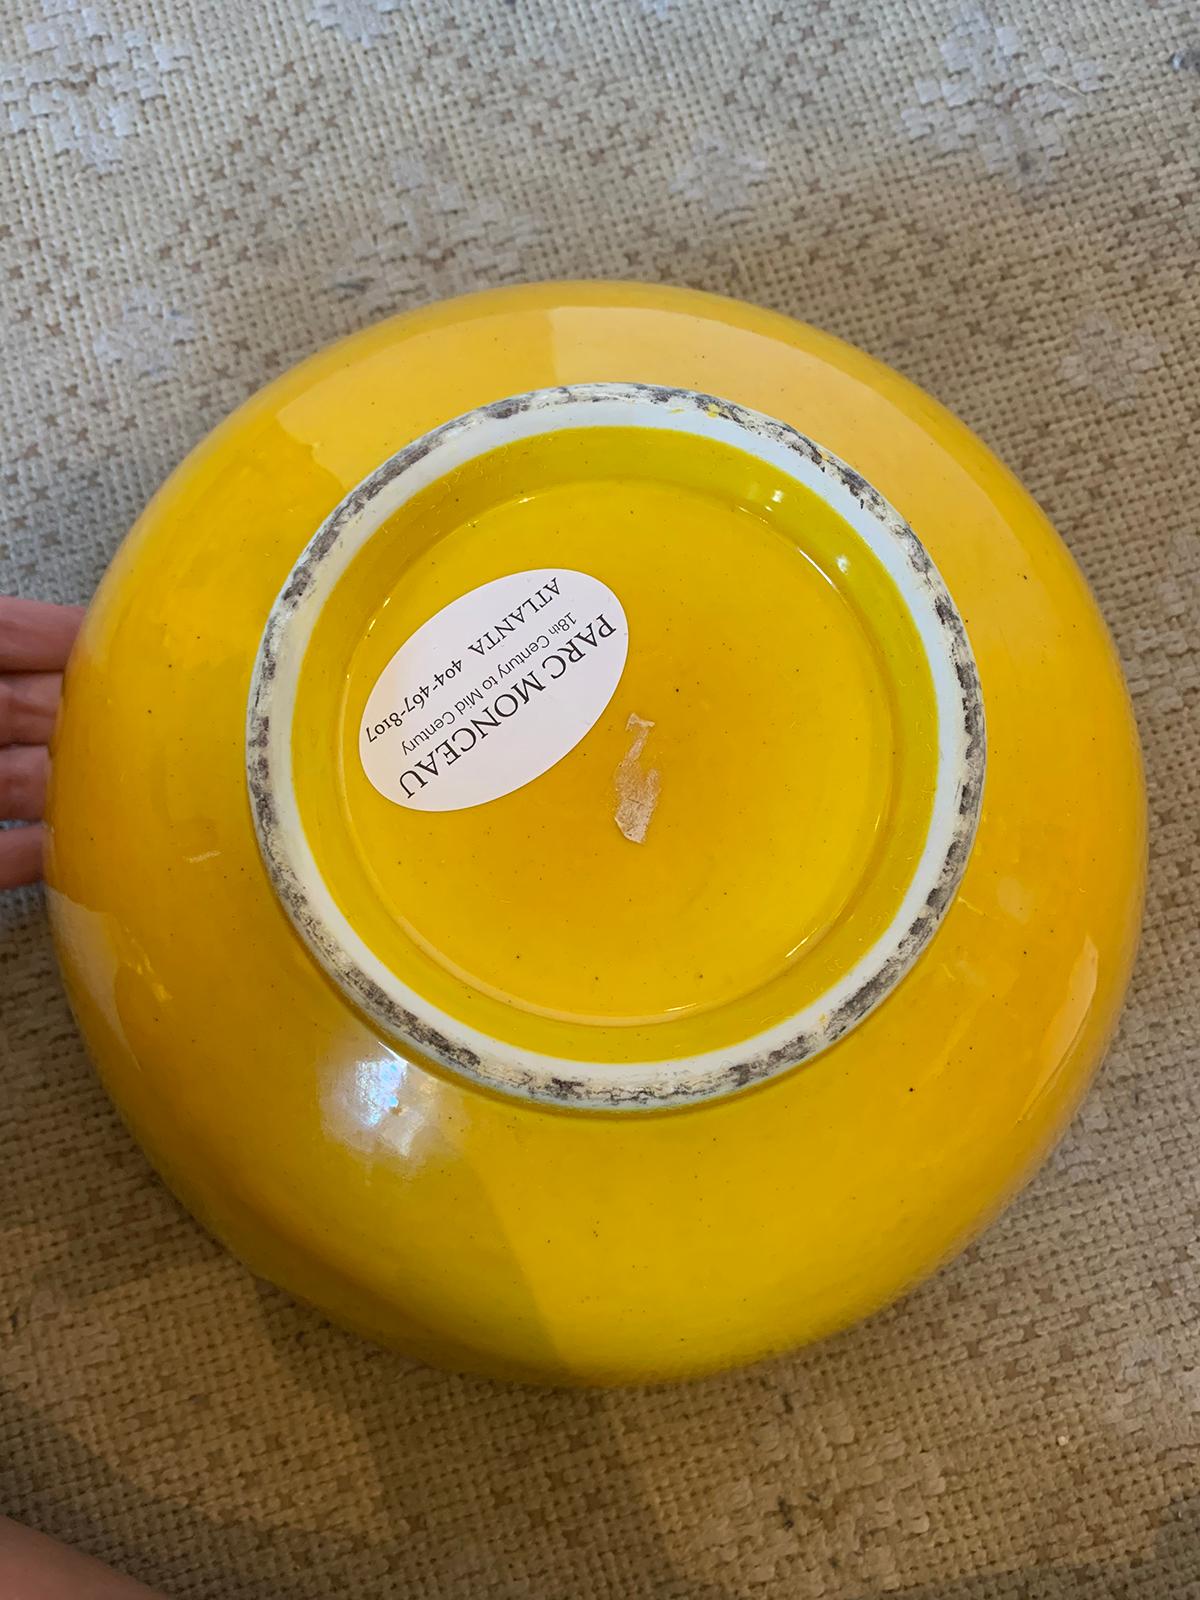 20th century Asian yellow porcelain bowl.